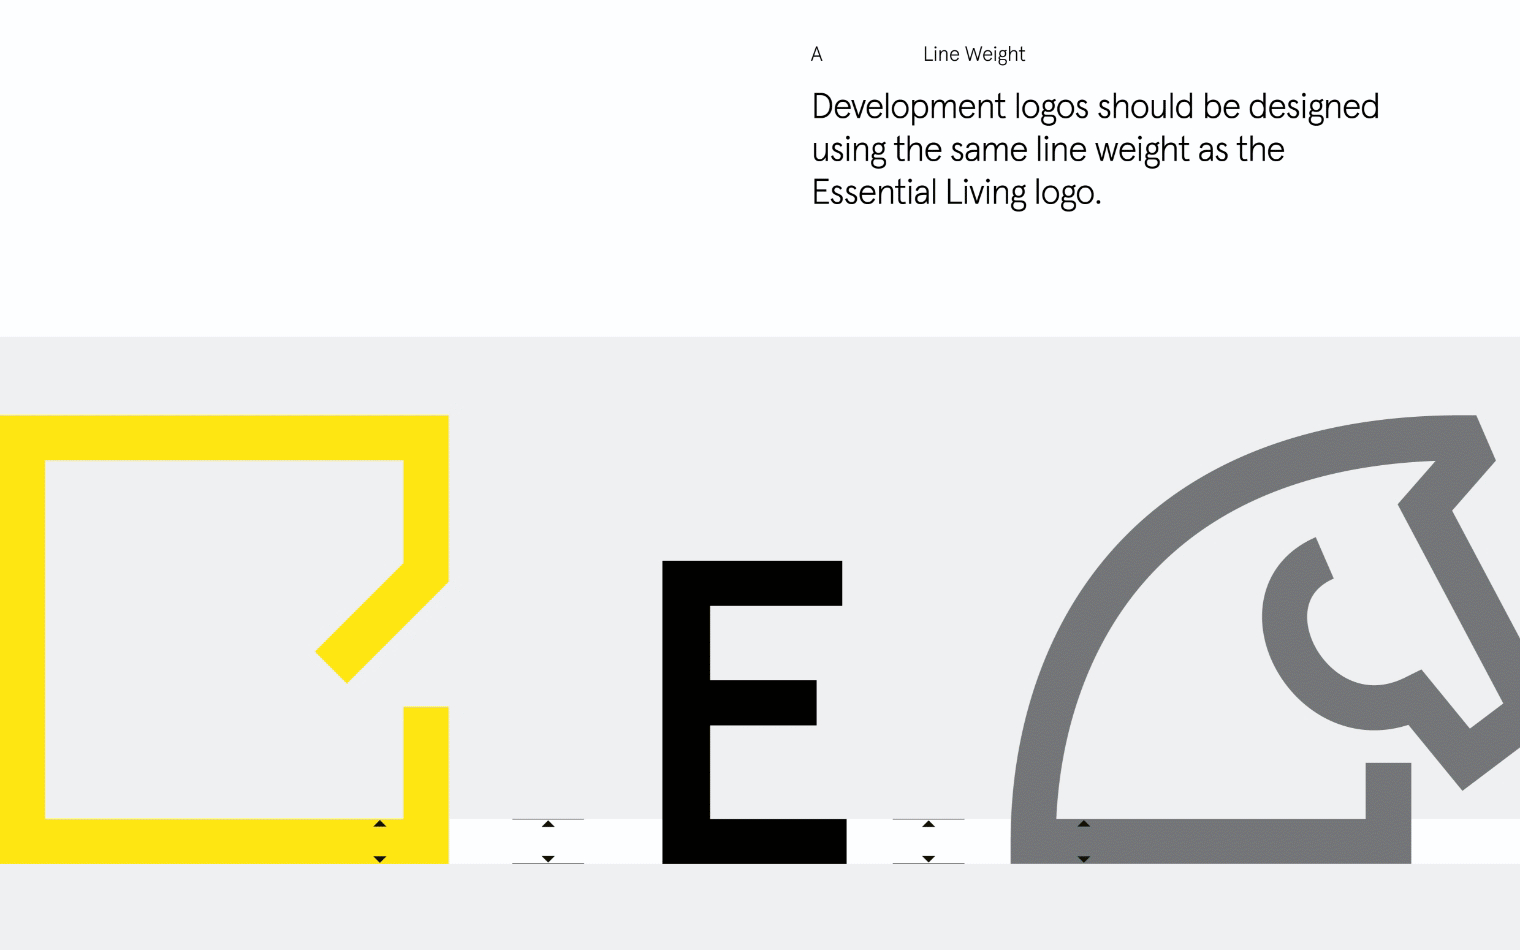 Essential Living | Steve Edge Design